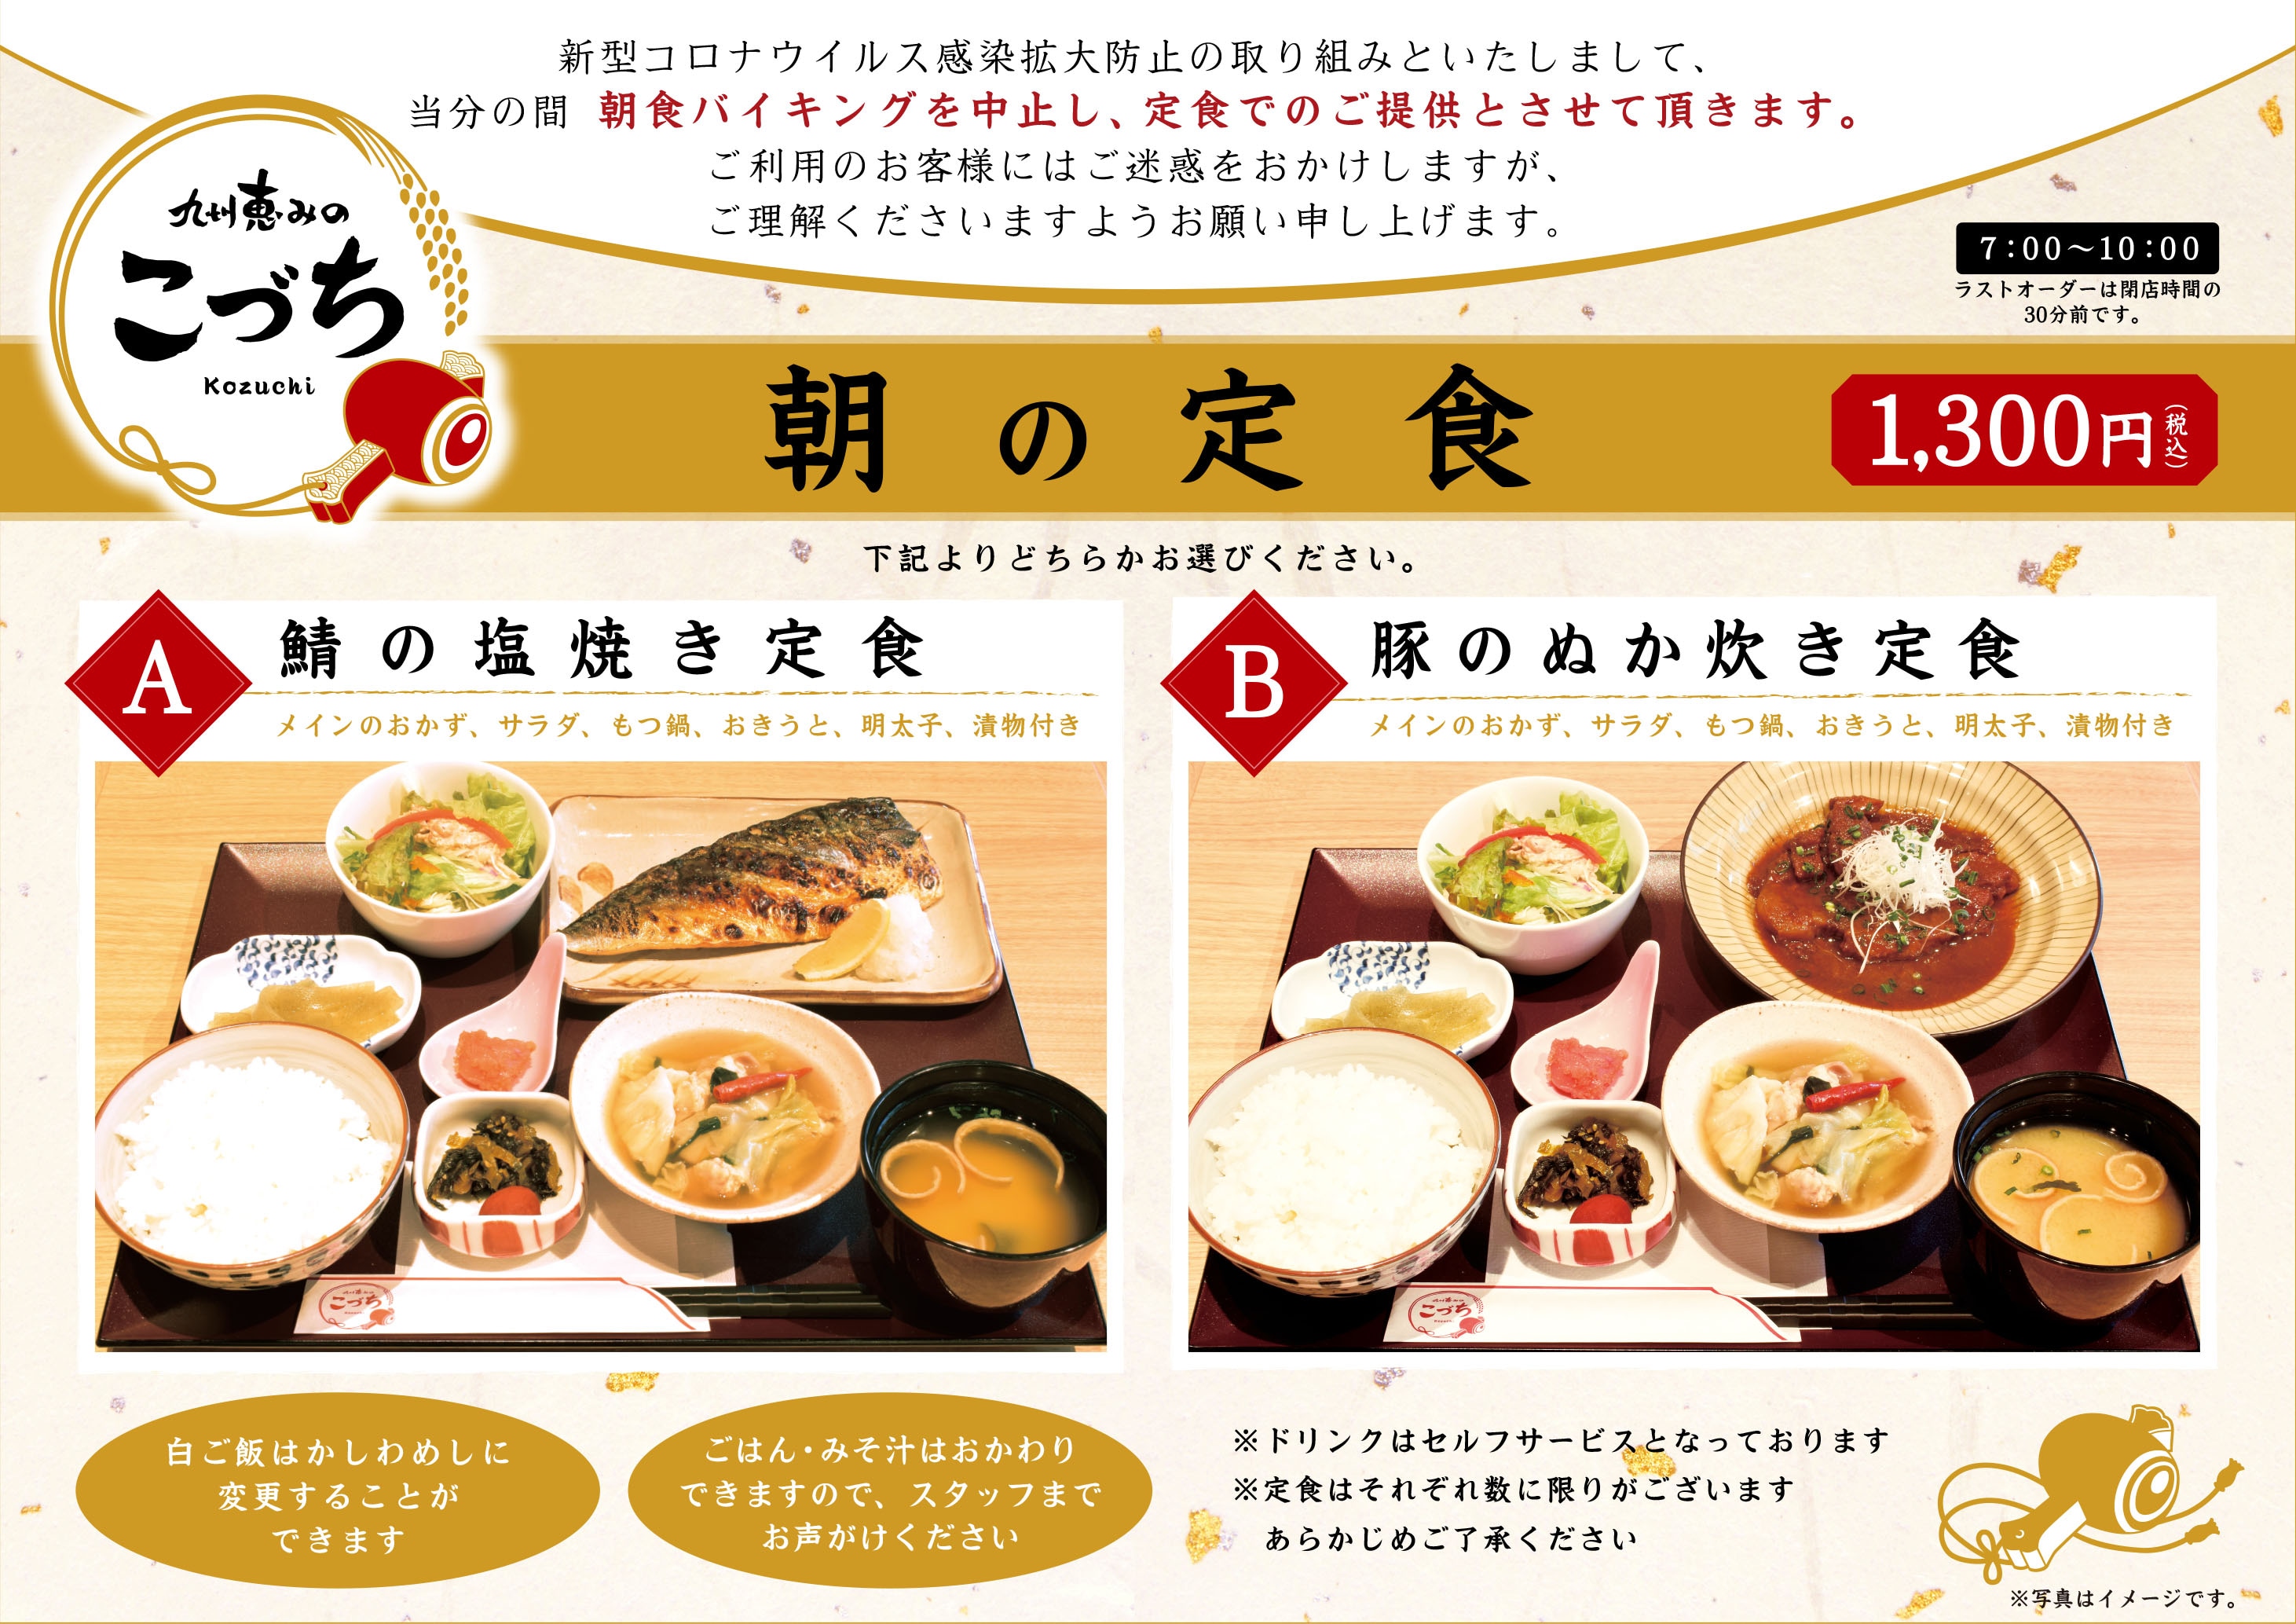 [Breakfast / Kyushu Megumi no Kozuchi] Business hours 7: 00-10: 00